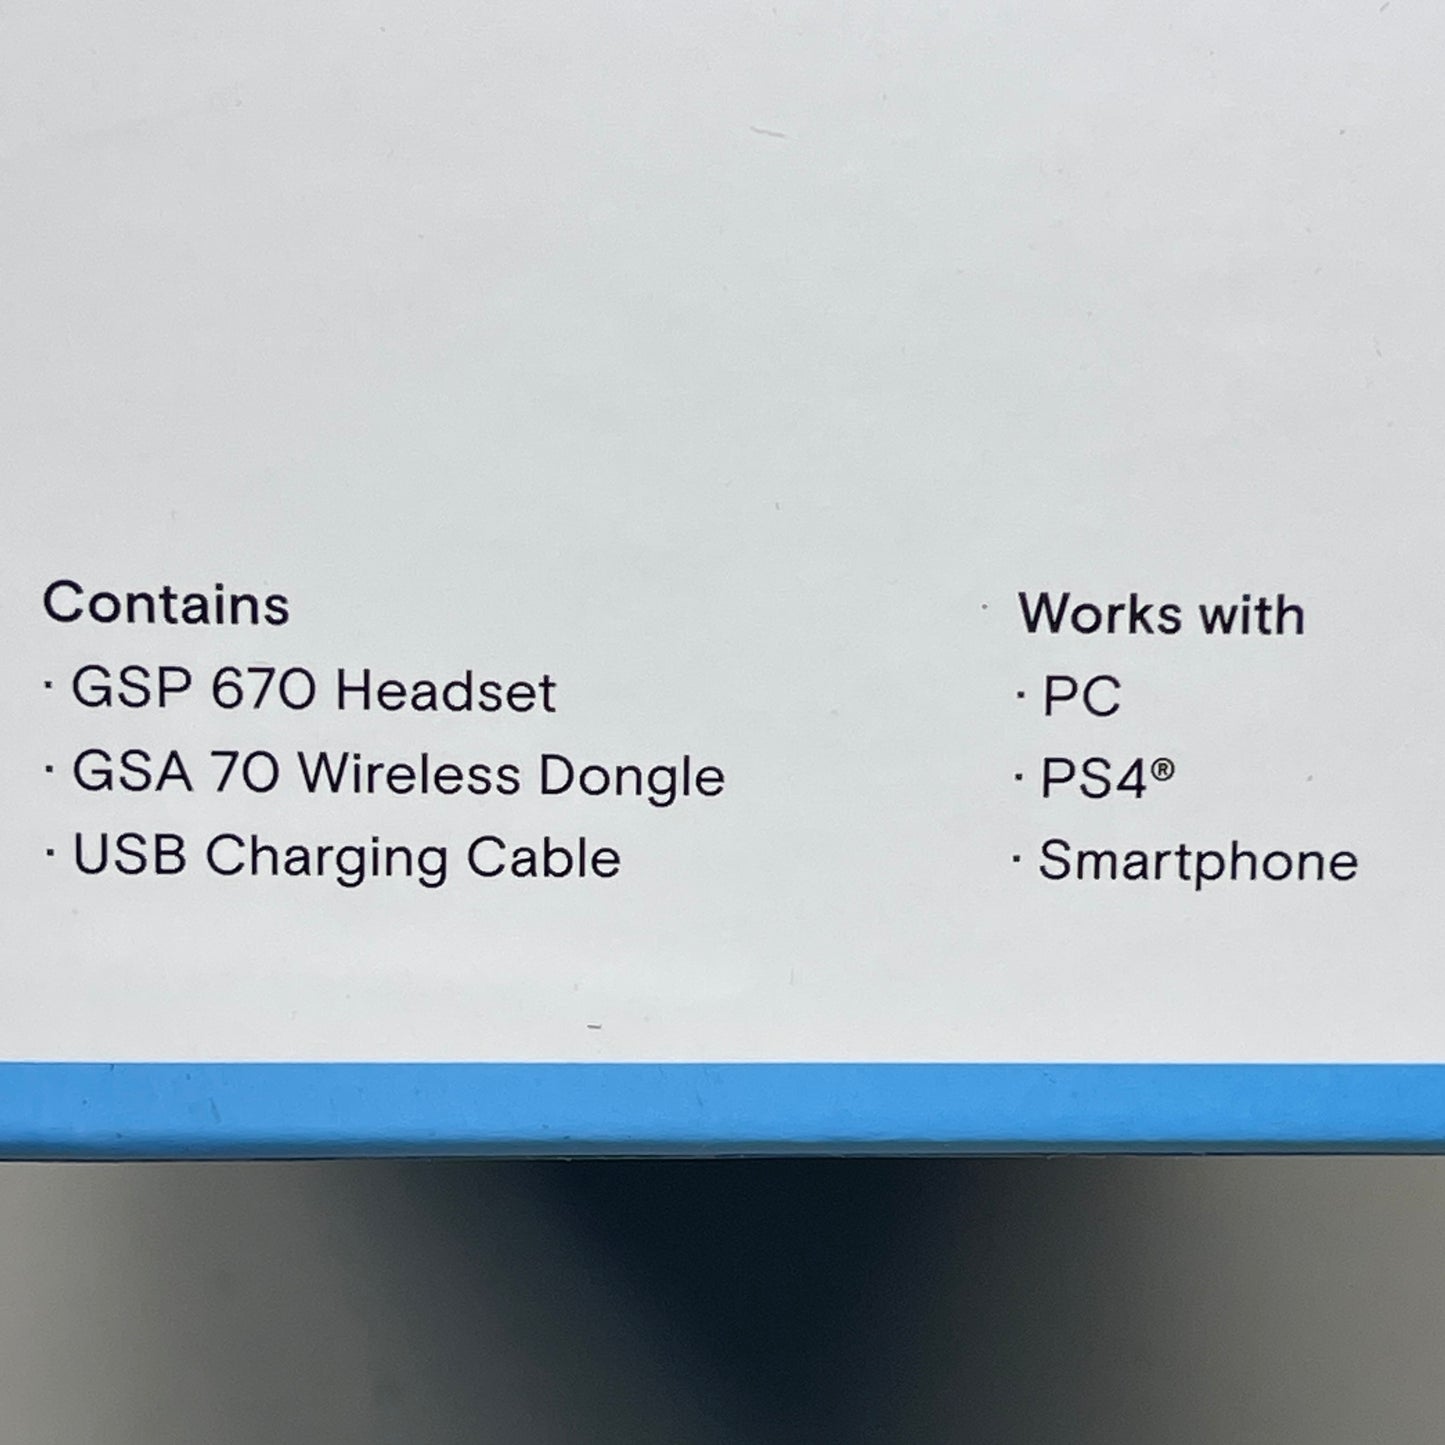 EPOS SENNHEISER GSP 670 Wireless Gaming Headset Bluetooth Low-Latency, 20 HR BAT